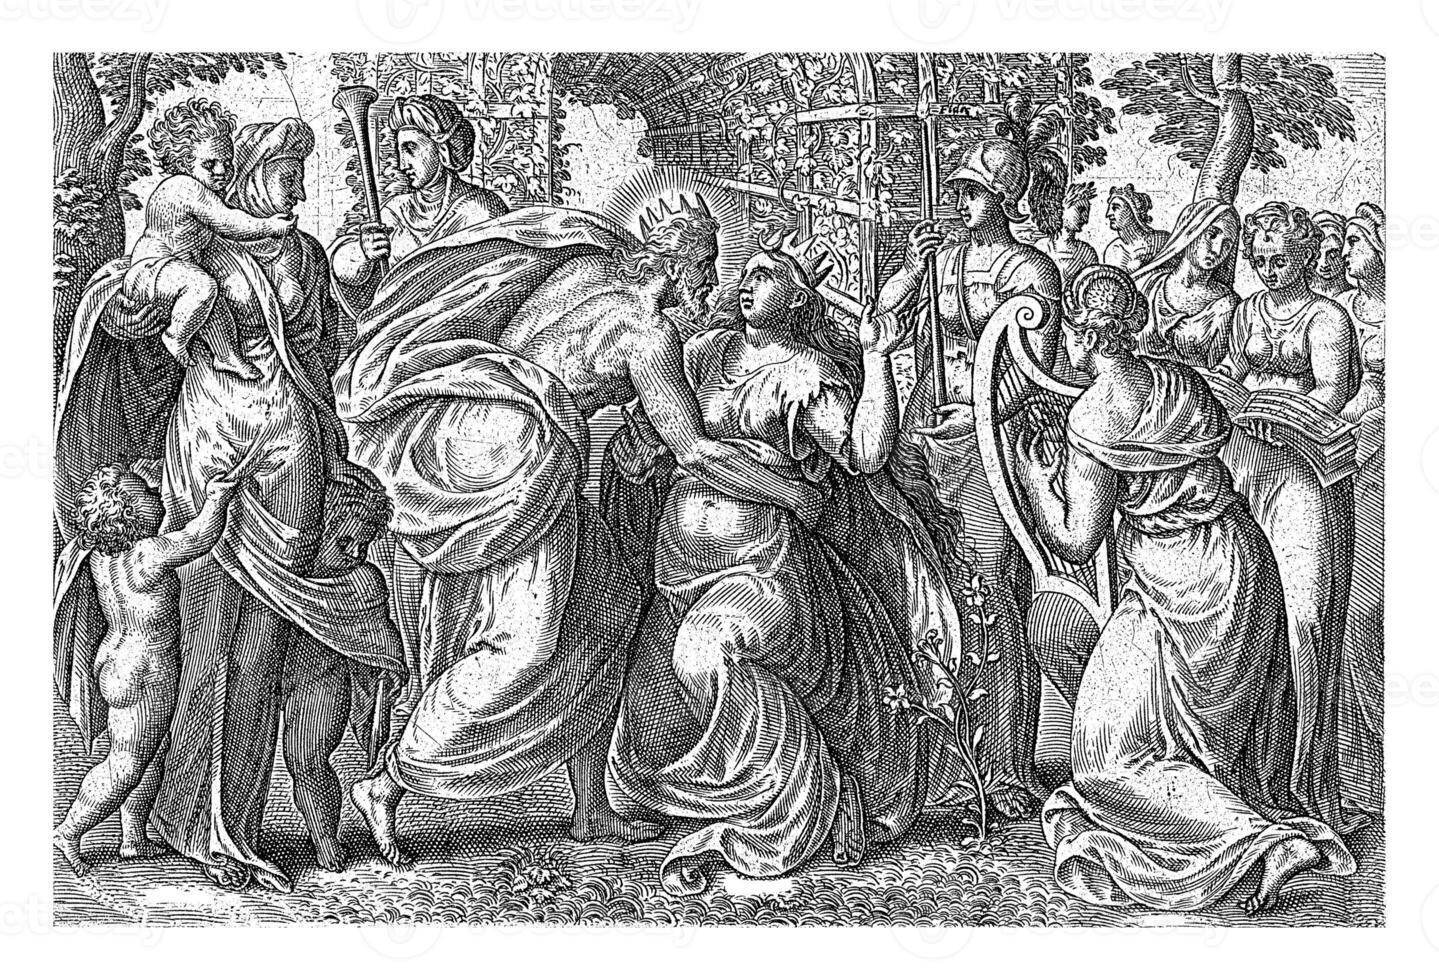 sposa e sposo abbracciando, johannes wierix possibilmente, dopo gerardo furgone Groeningen, 1574 foto